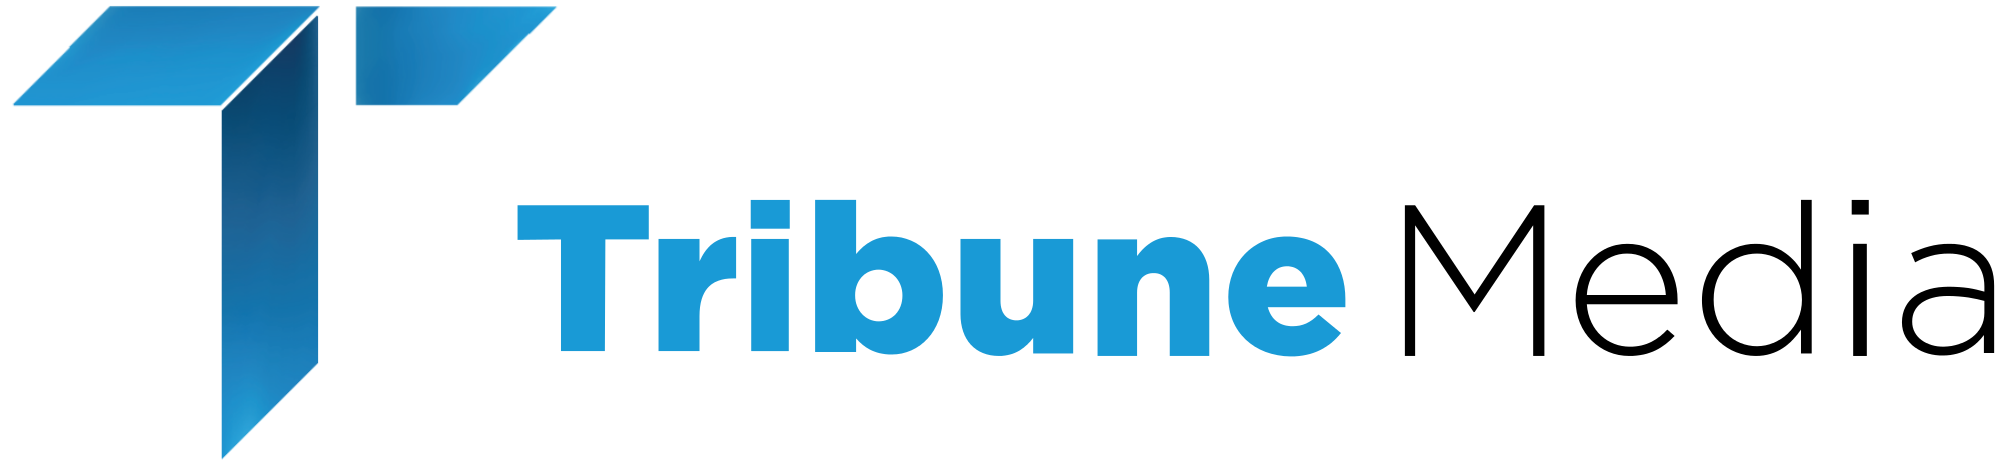 Tribune Media Company